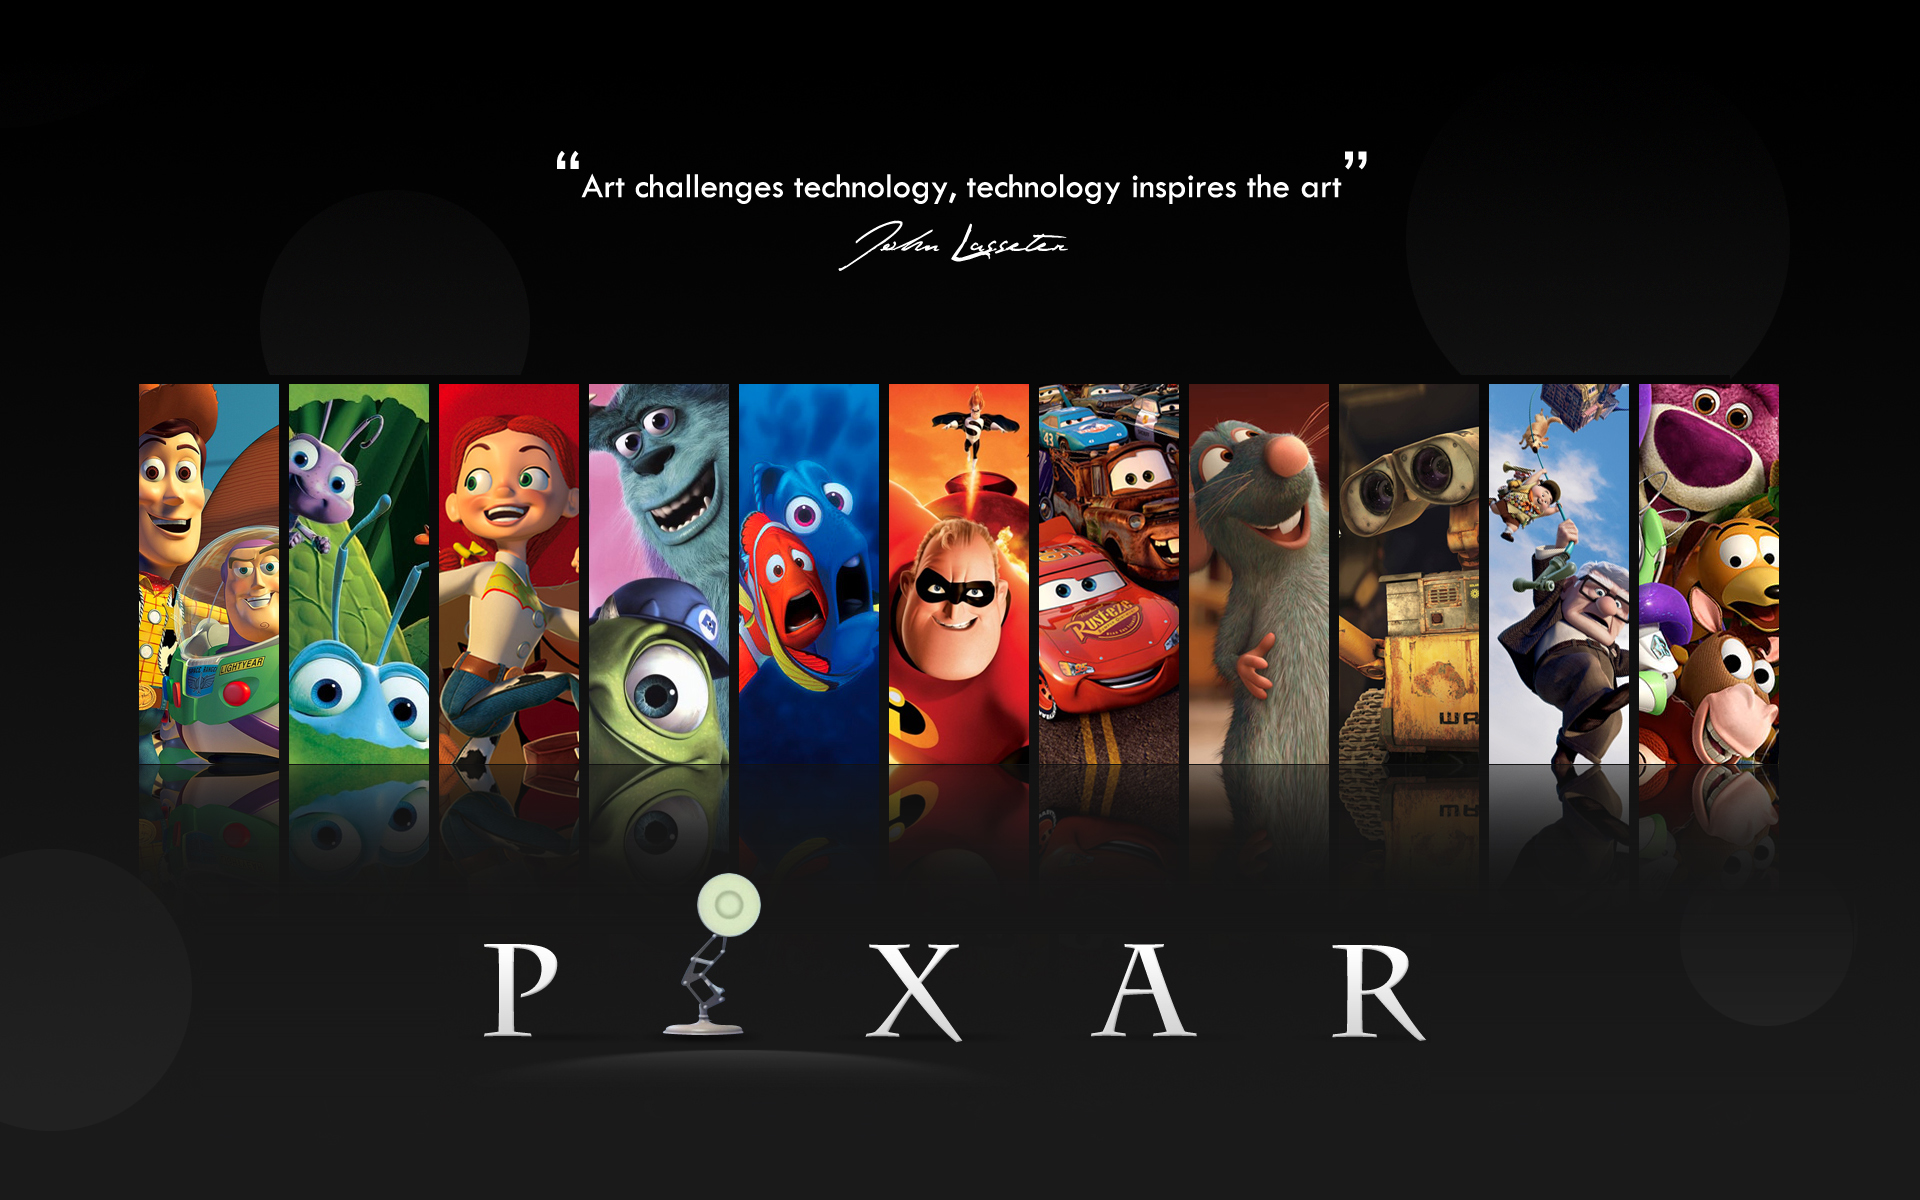 44 Disney Pixar Wallpaper Hd On Wallpapersafari Images, Photos, Reviews